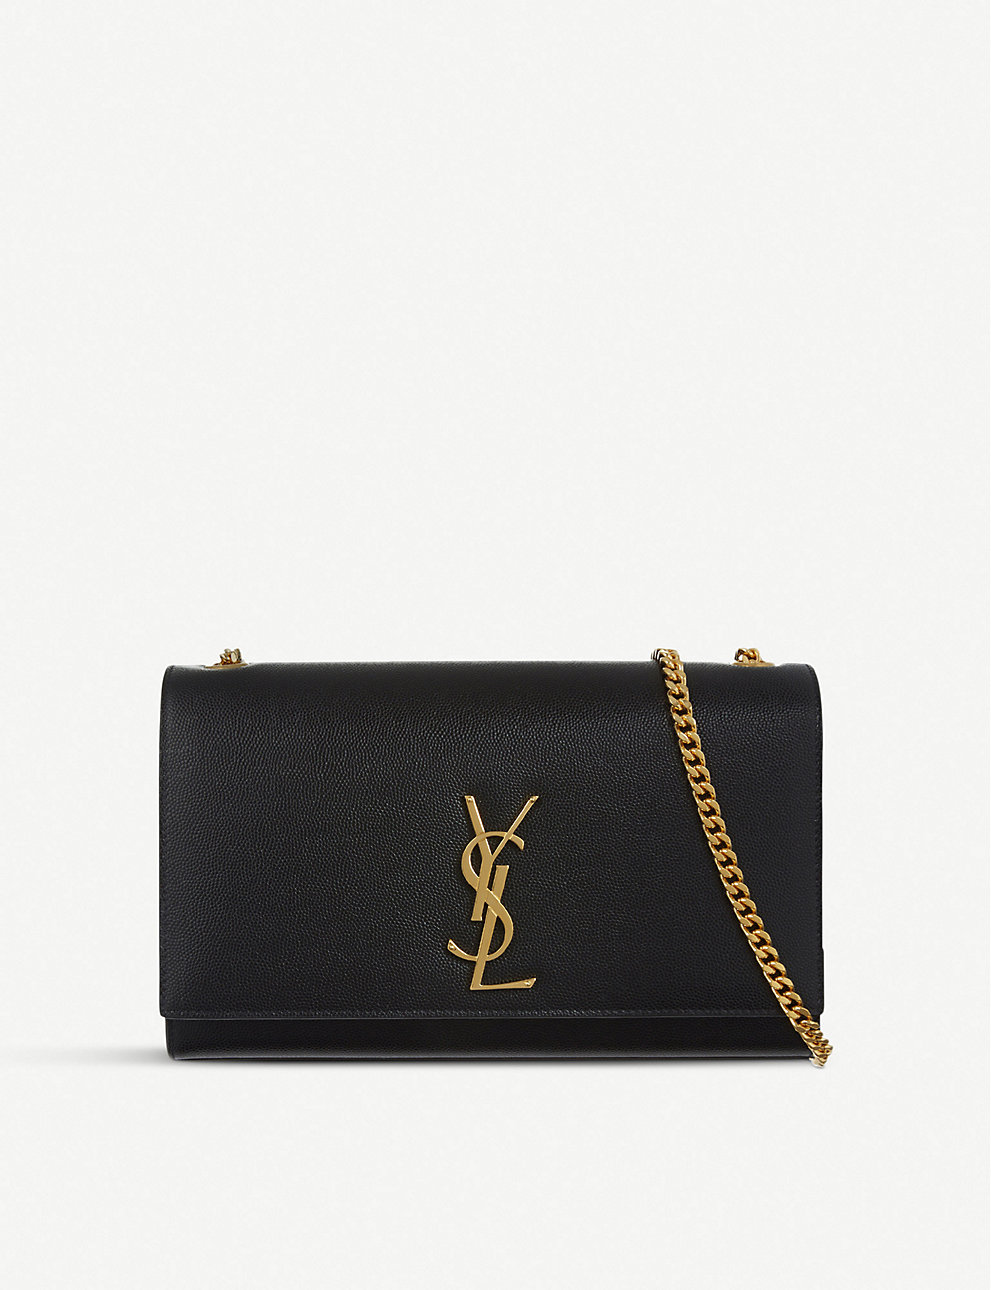 Gárgaras Cancelar Acostumbrar bolso mediano de piel saint laurent kate negro – Tienda de bolsos Yves  Saint Laurent de alta calidad